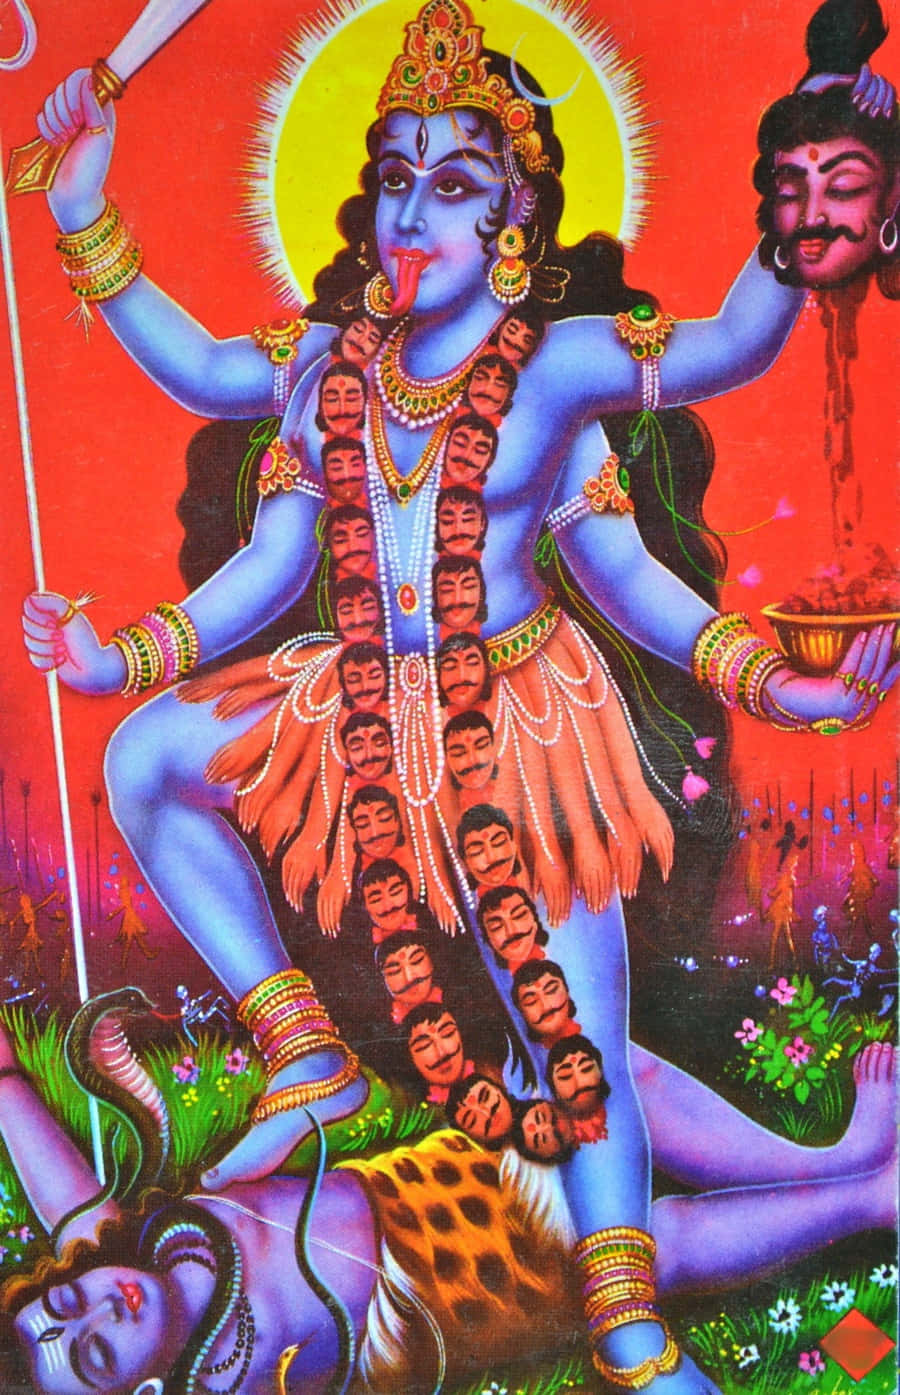 Imagende La Diosa Hindú Kali